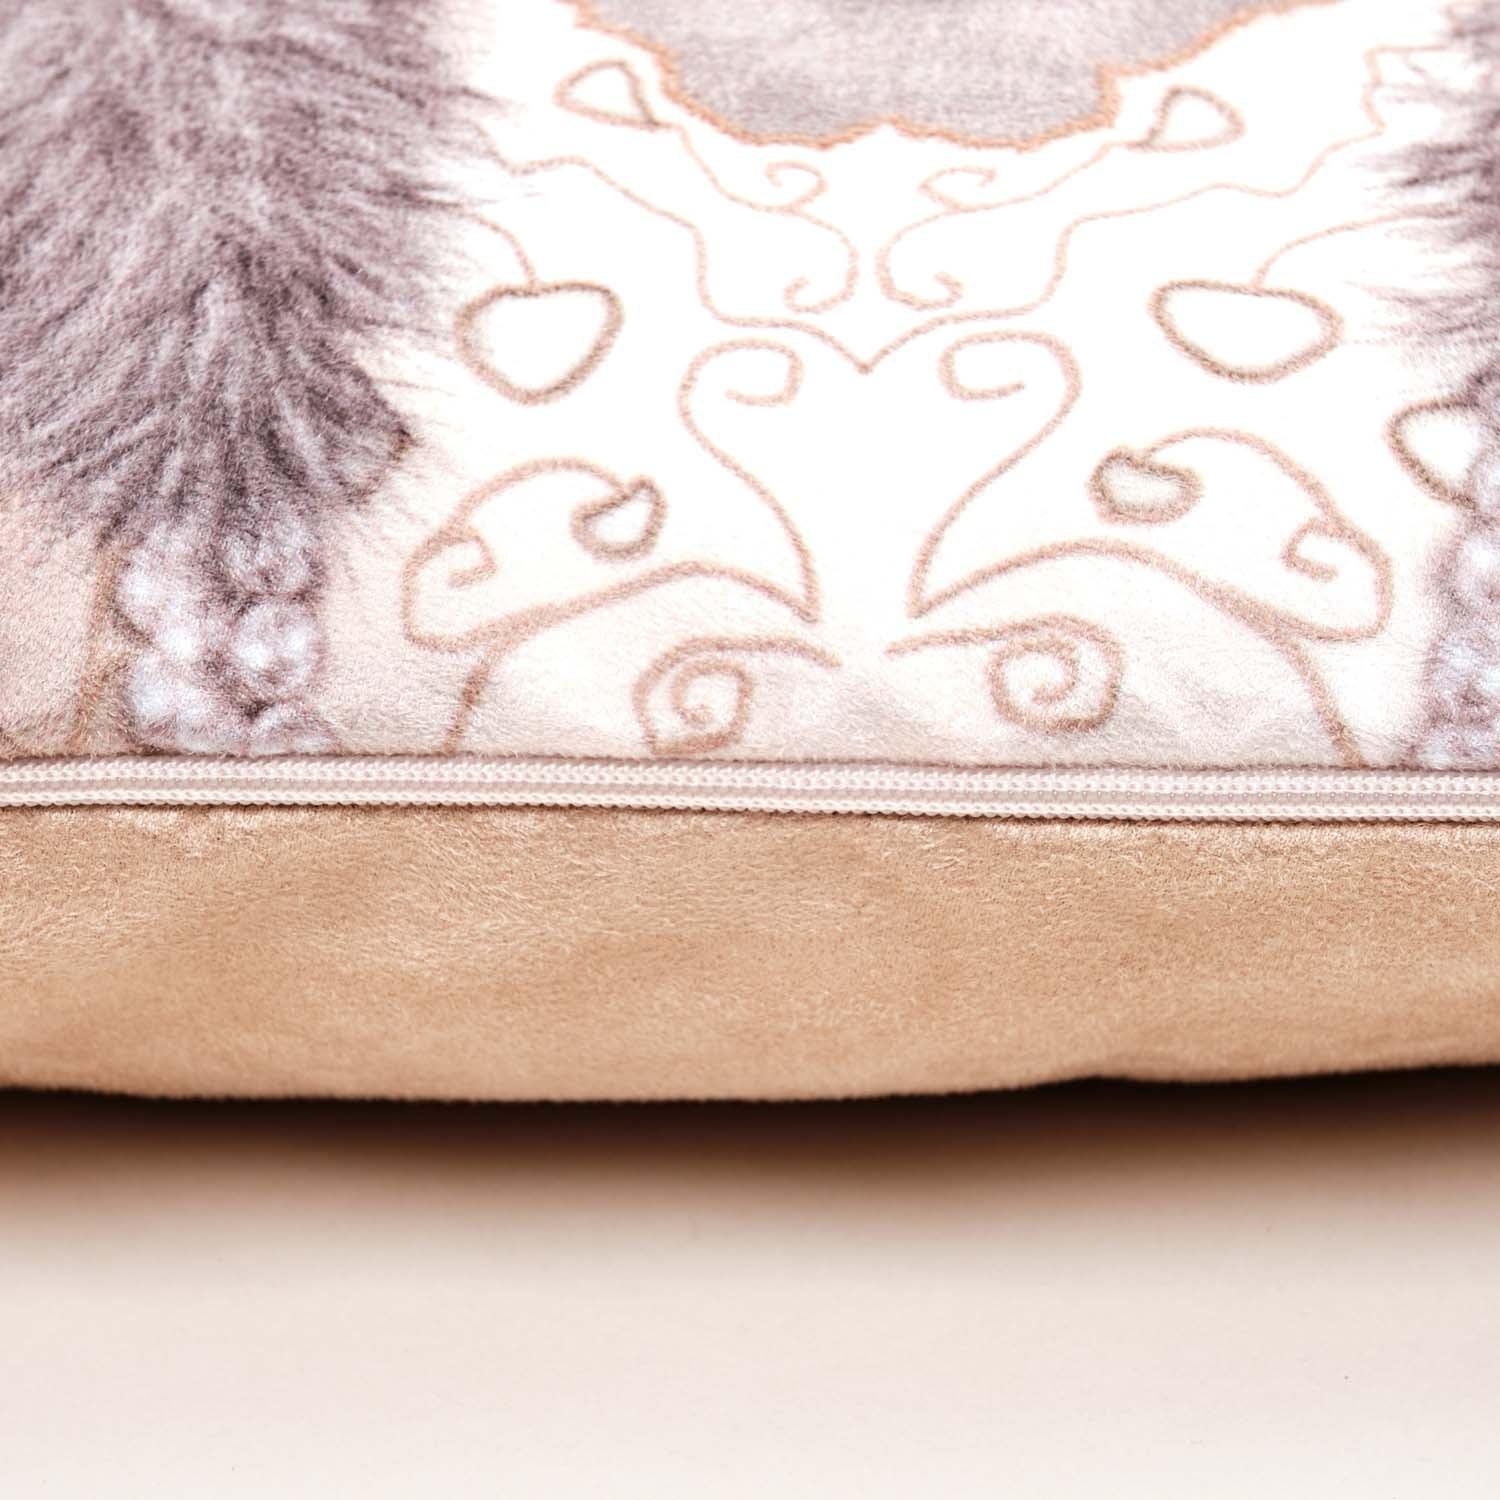 Hit Dogs Mono - Pets Rock Cushion - Handmade Cushions UK - WeLoveCushions